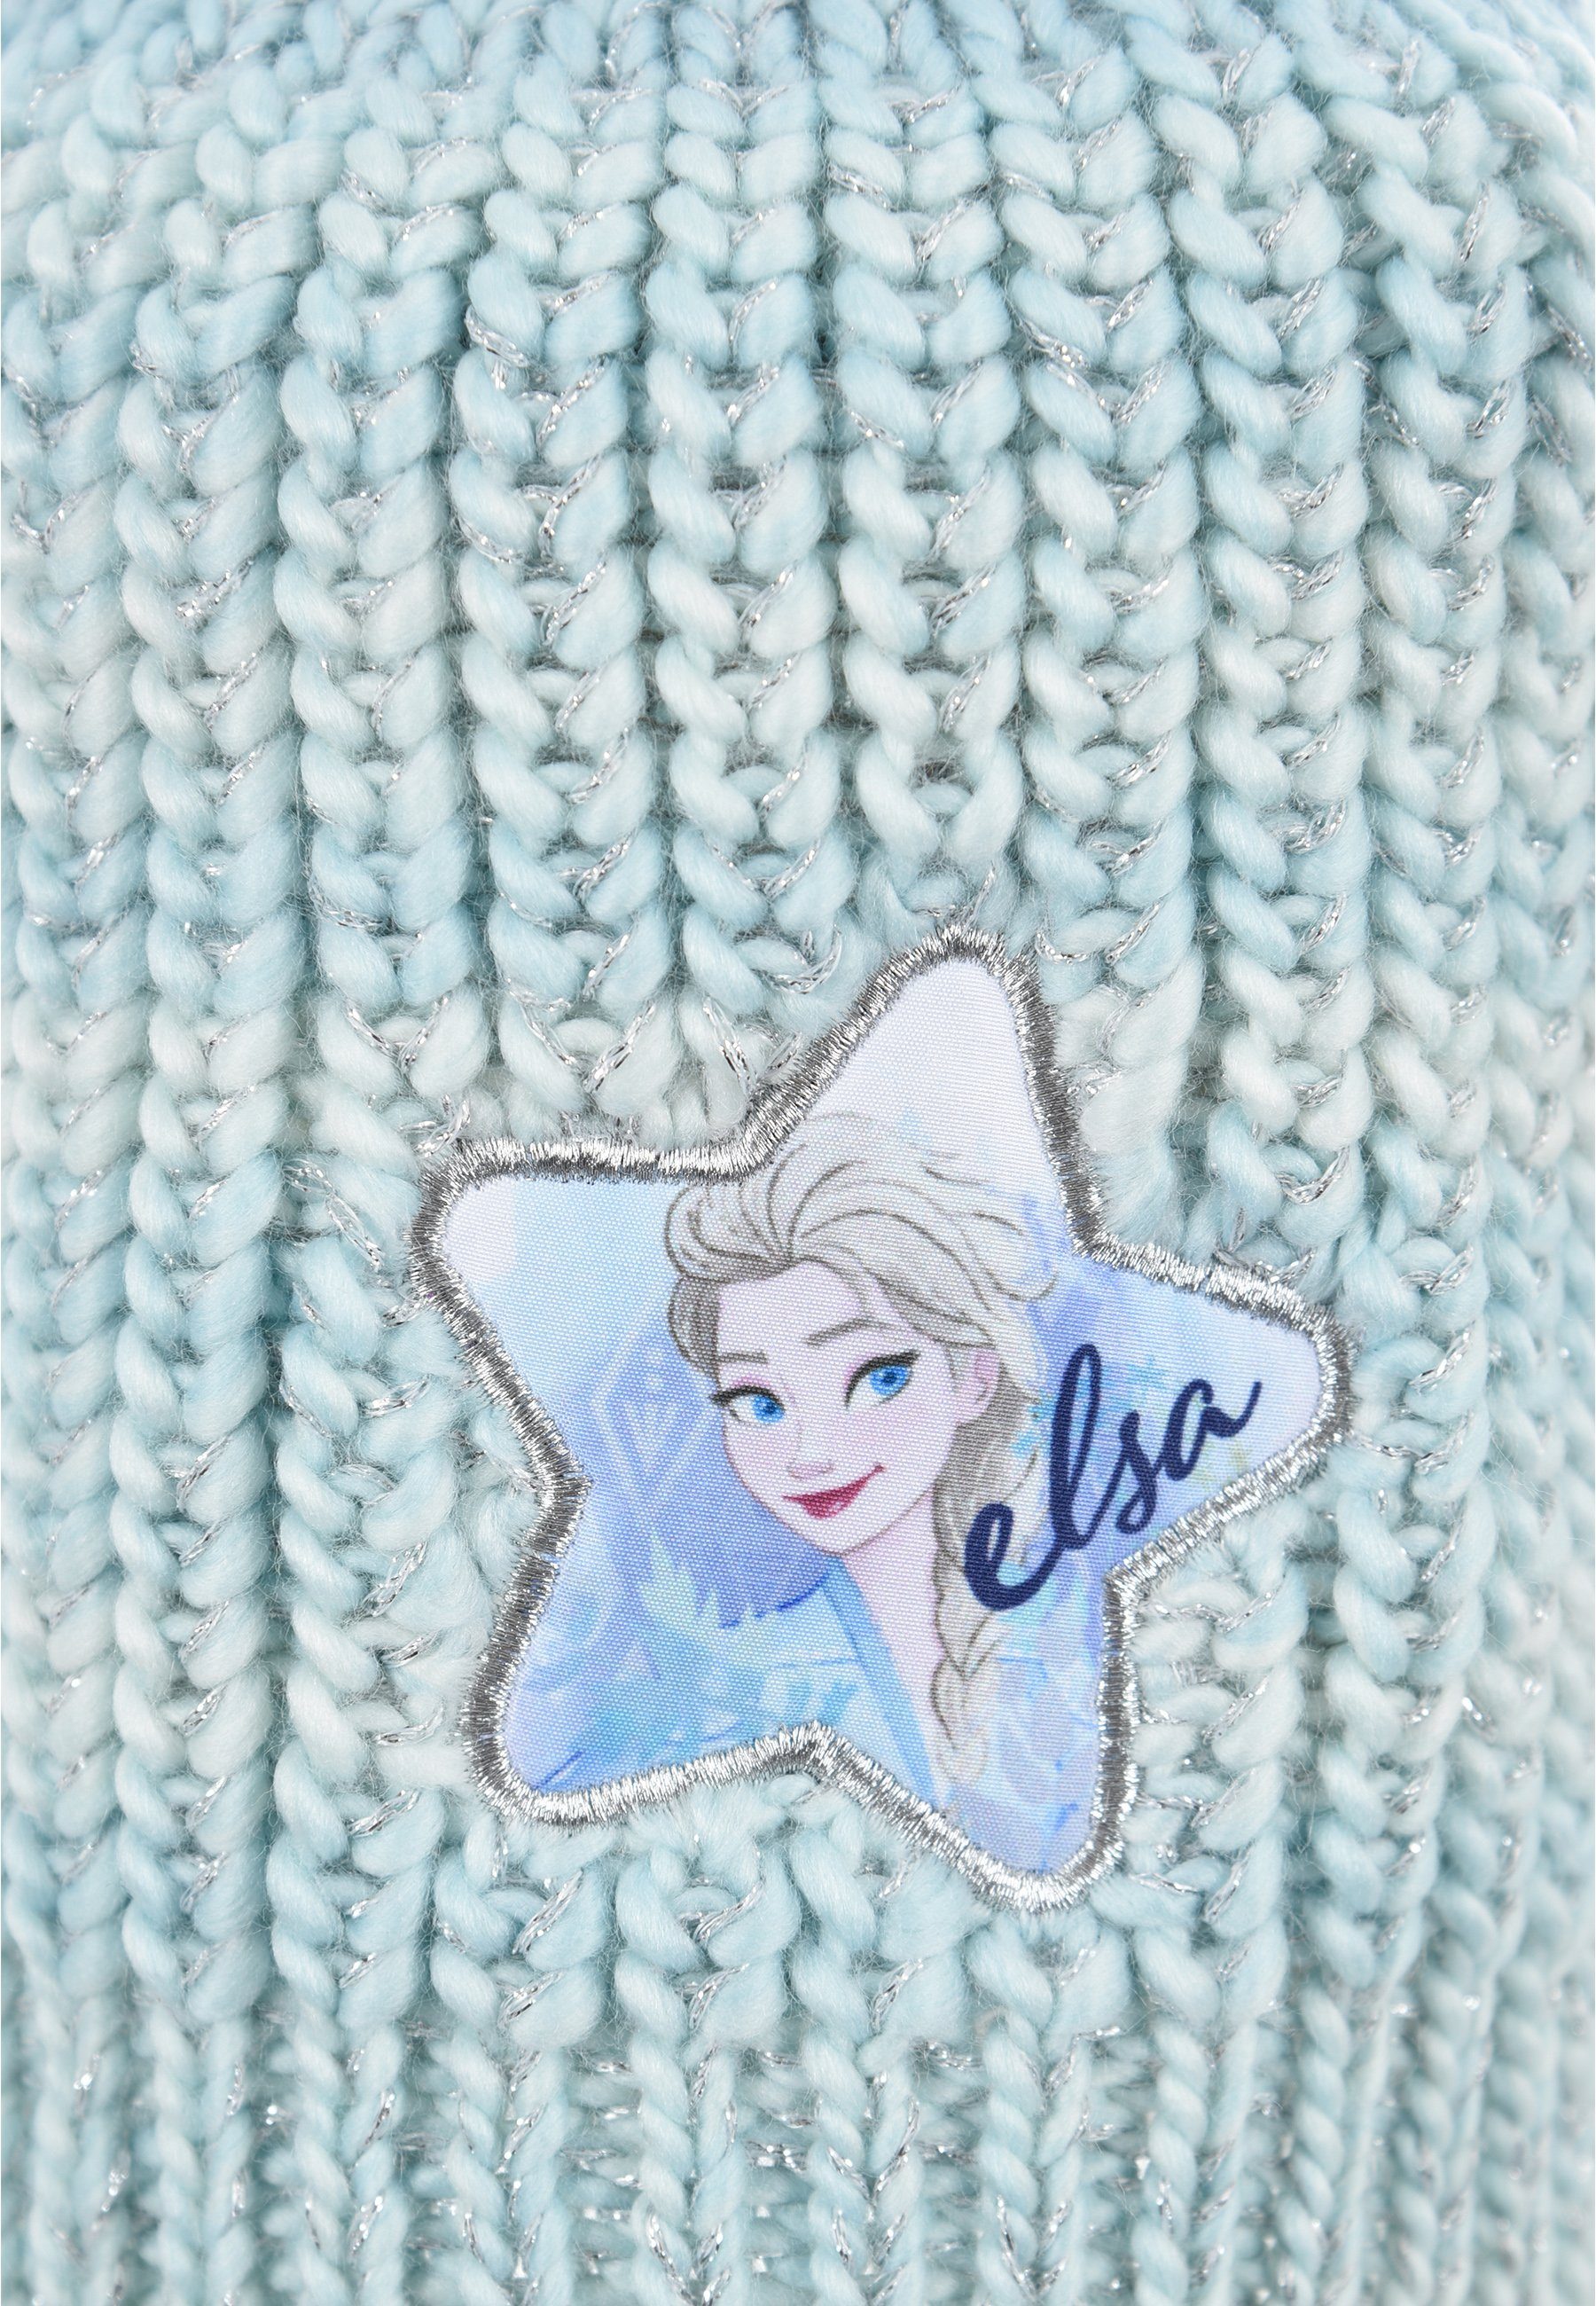 Elsa Kinder Disney Bommelmütze Eiskönigin Bommelmütze Winter-Mütze Mädchen Blau Frozen